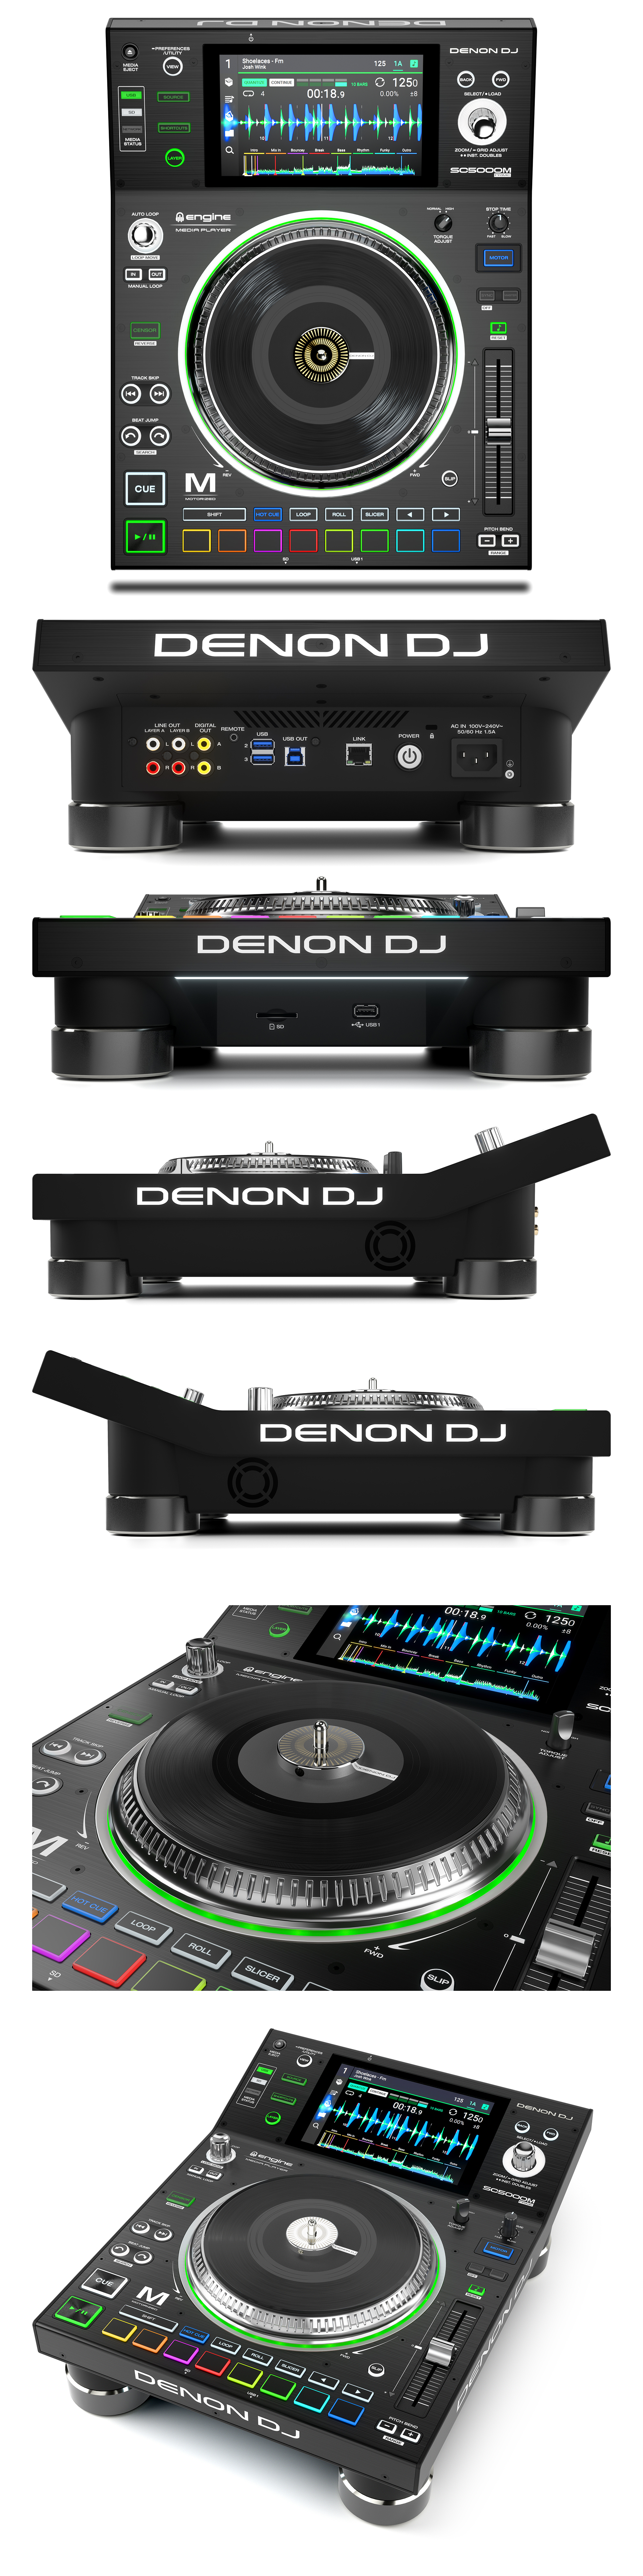 新商品のご紹介 【美品】Denon DJ SC5000M Prime【動作確認済】 DJ機器